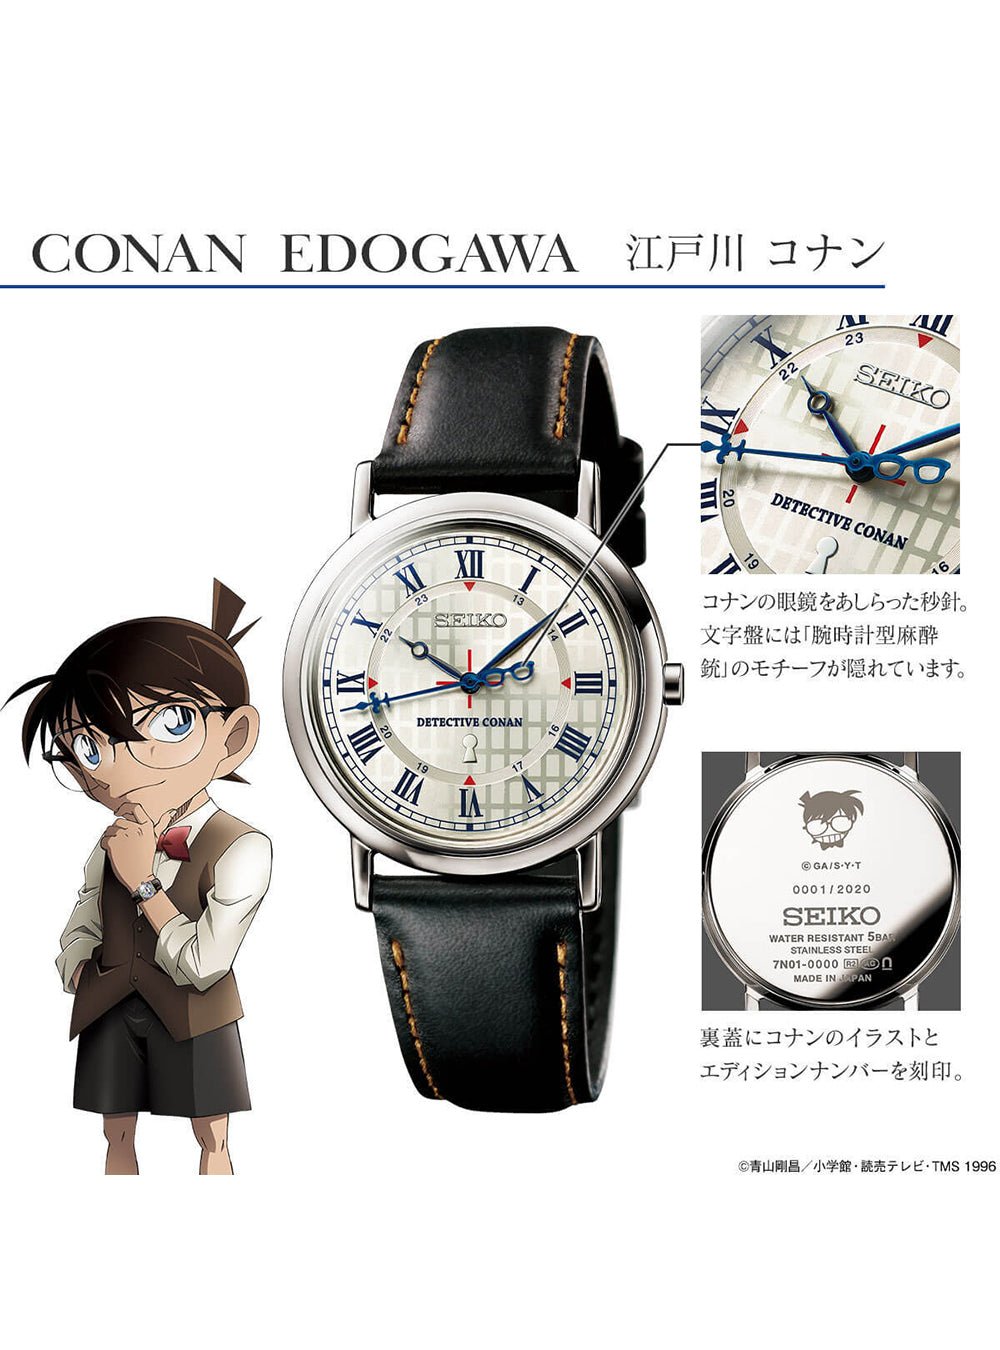 DETECTIVE CONAN×SEIKO CONAN EDOGAWA MODEL MADE IN JAPAN LIMITED EDITIO –  japan-select